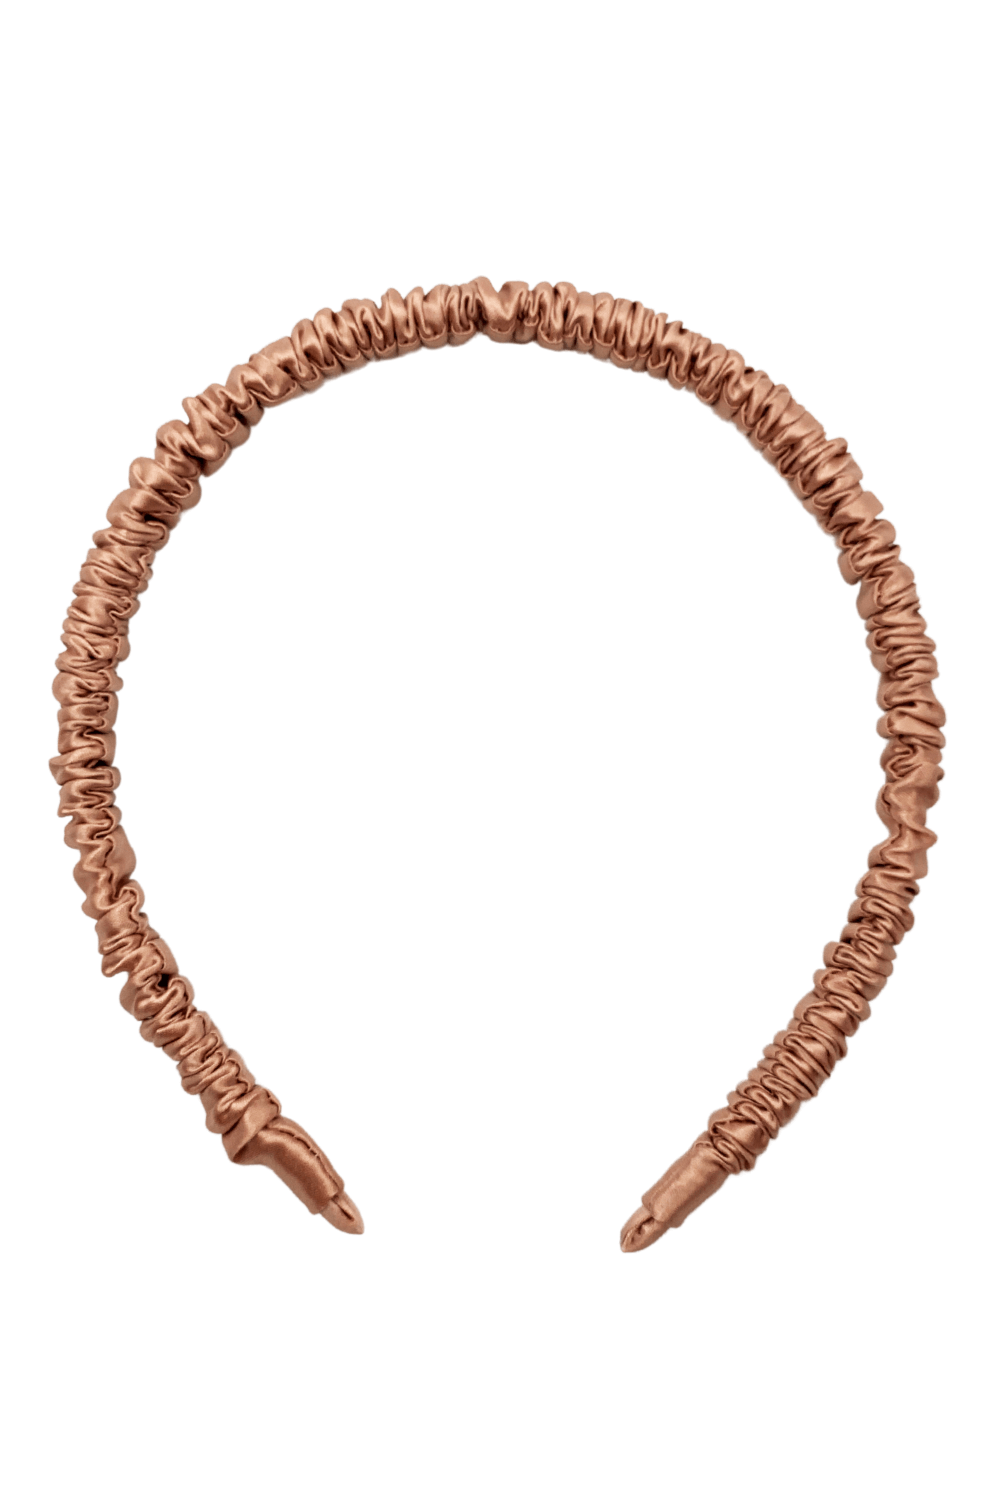 Silk Headband (Thin) - Rose Gold - BASK ™